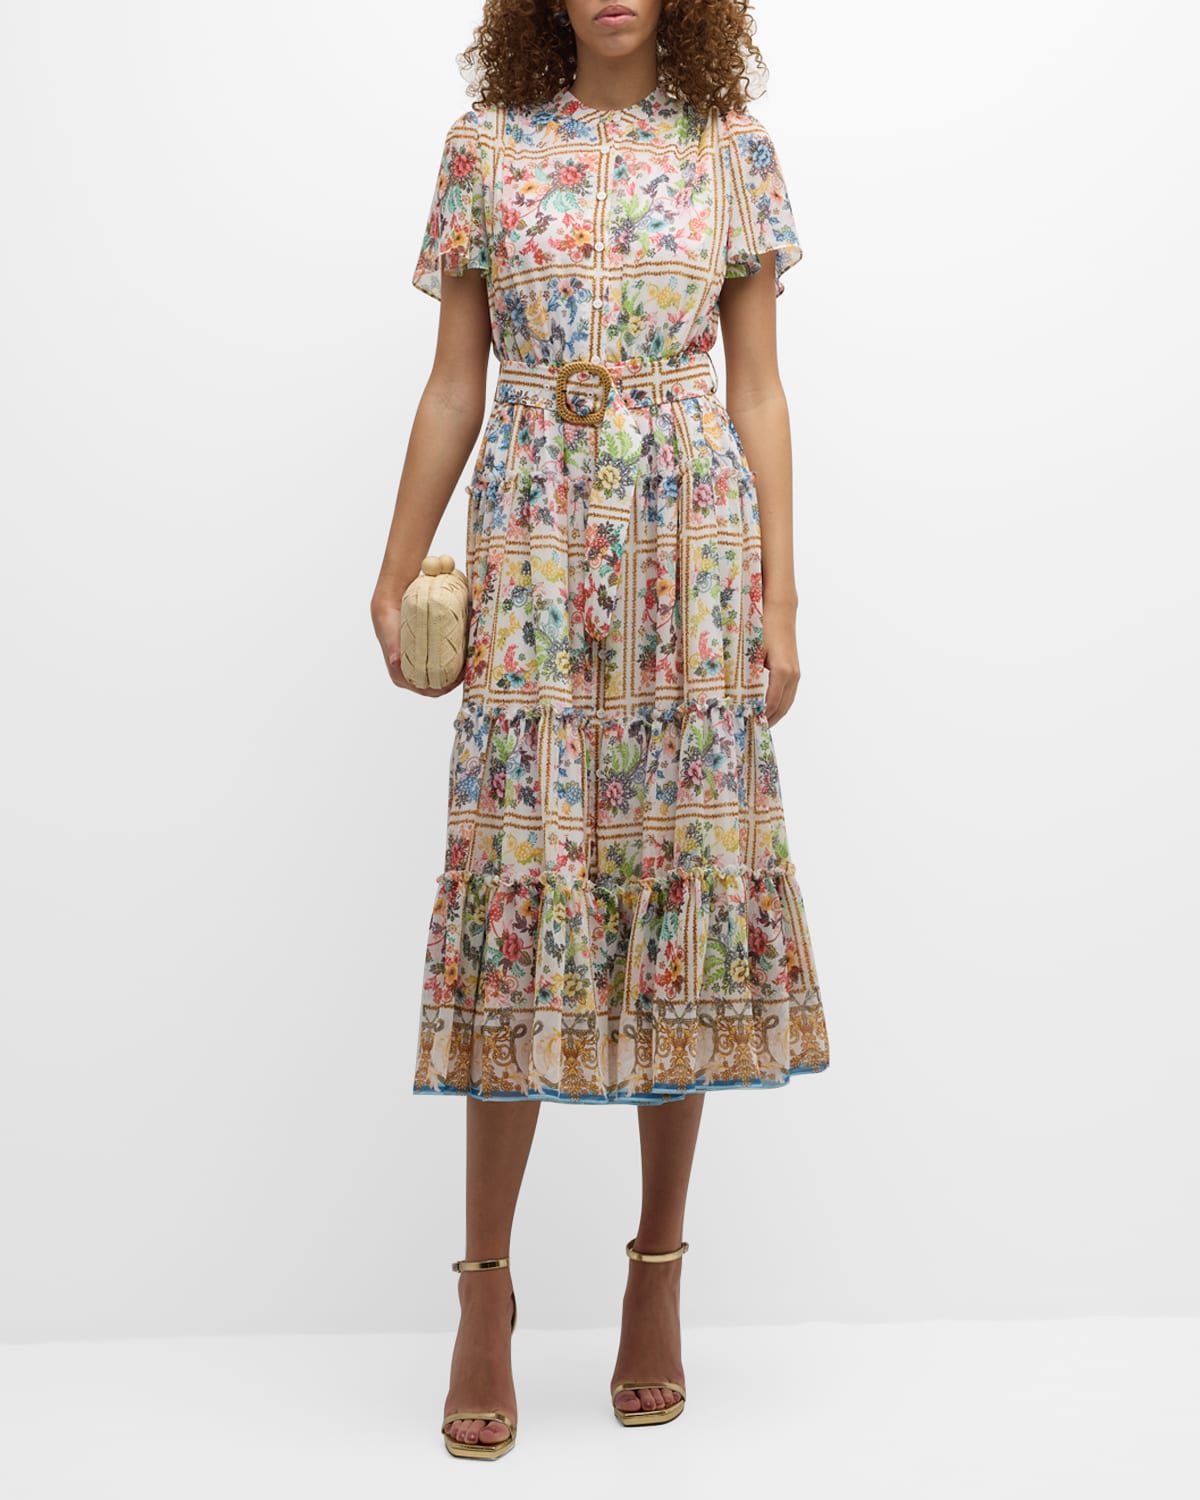 The Aimee Tiered Floral-Print Midi Dress